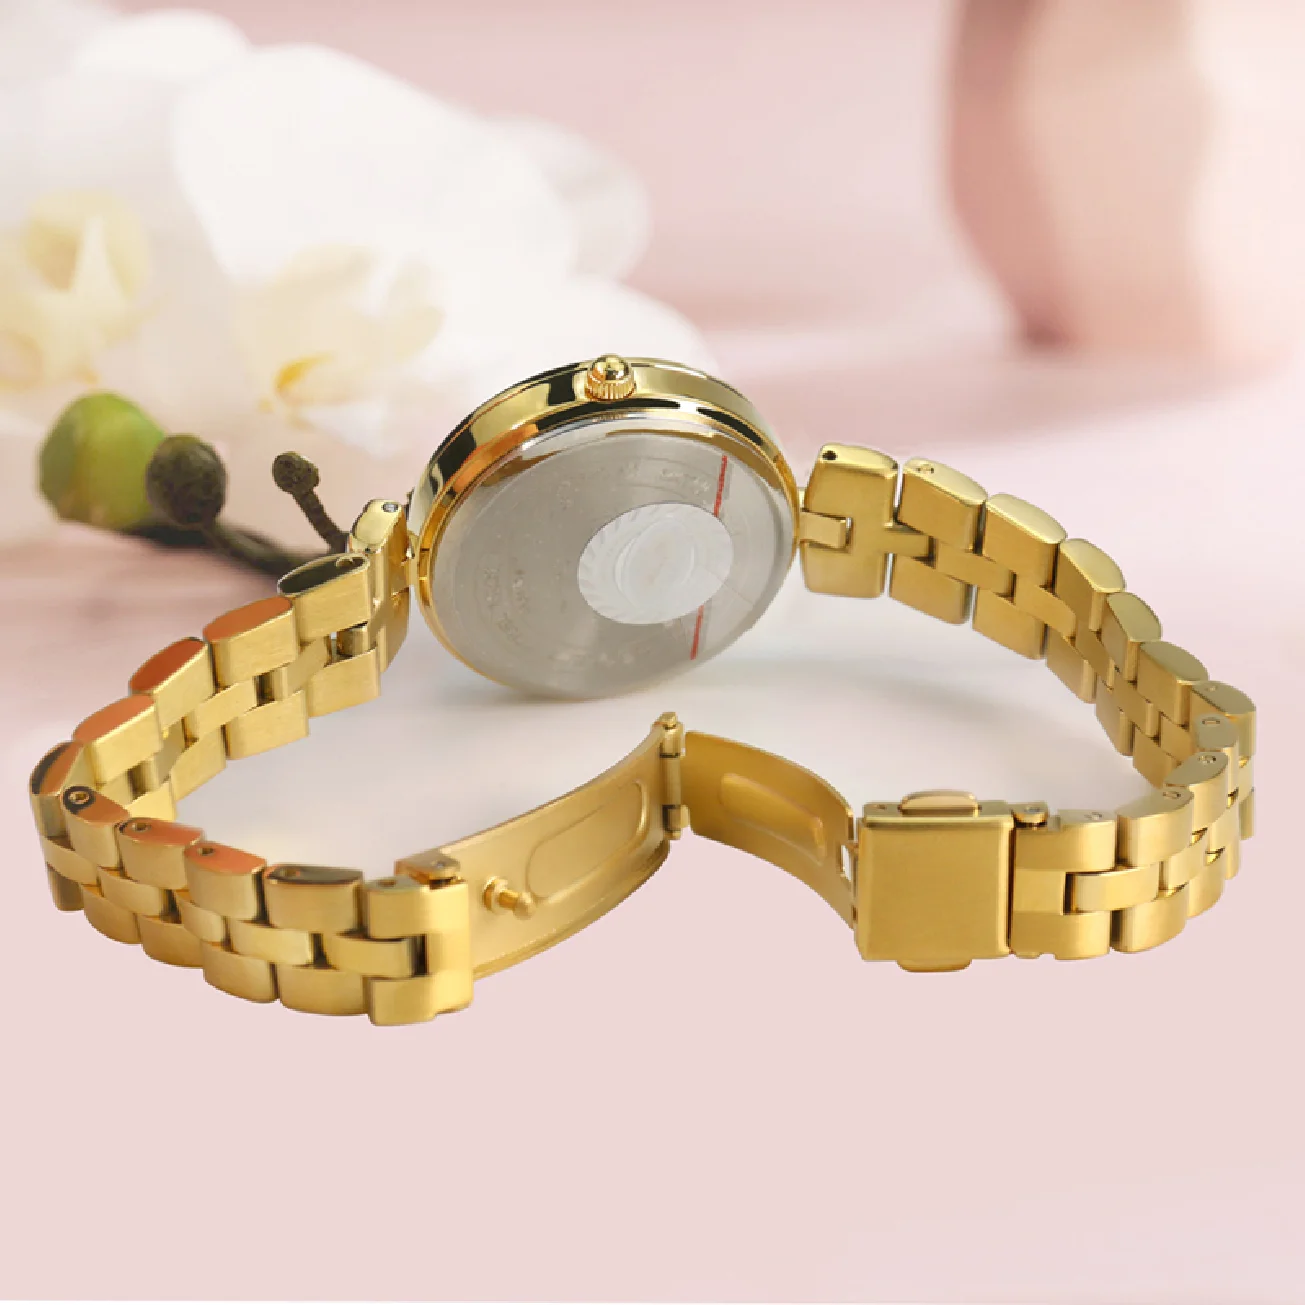 REWARD Fashion Luxury Women Watches Golden Stainless Steel Ladies Quartz Watch Waterproof Luminous Date Lady Dress Wristwatch enlarge